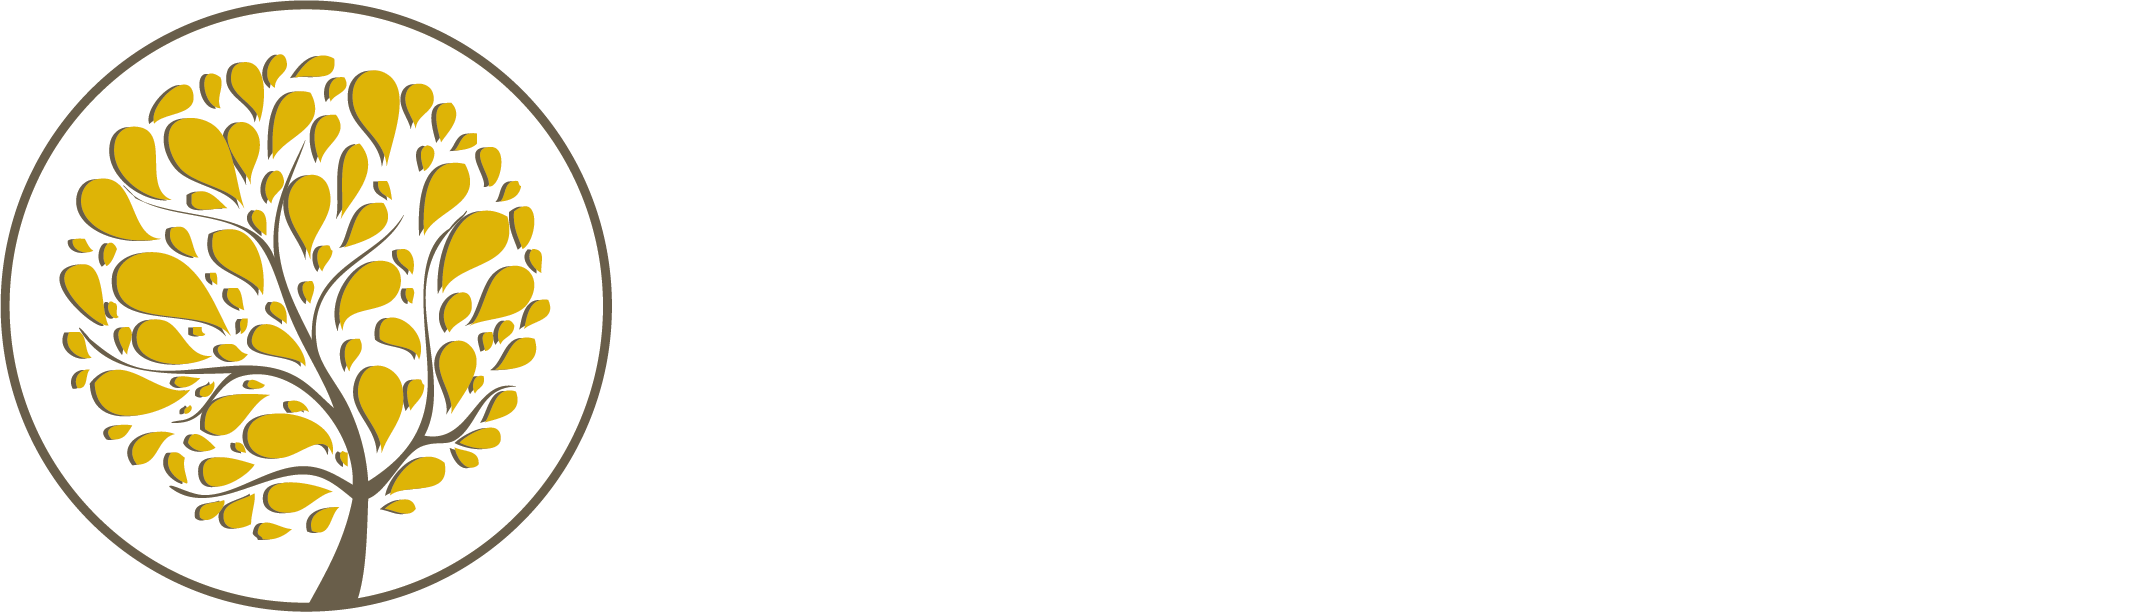 Parker - Parker Health Care and Rehabilitation